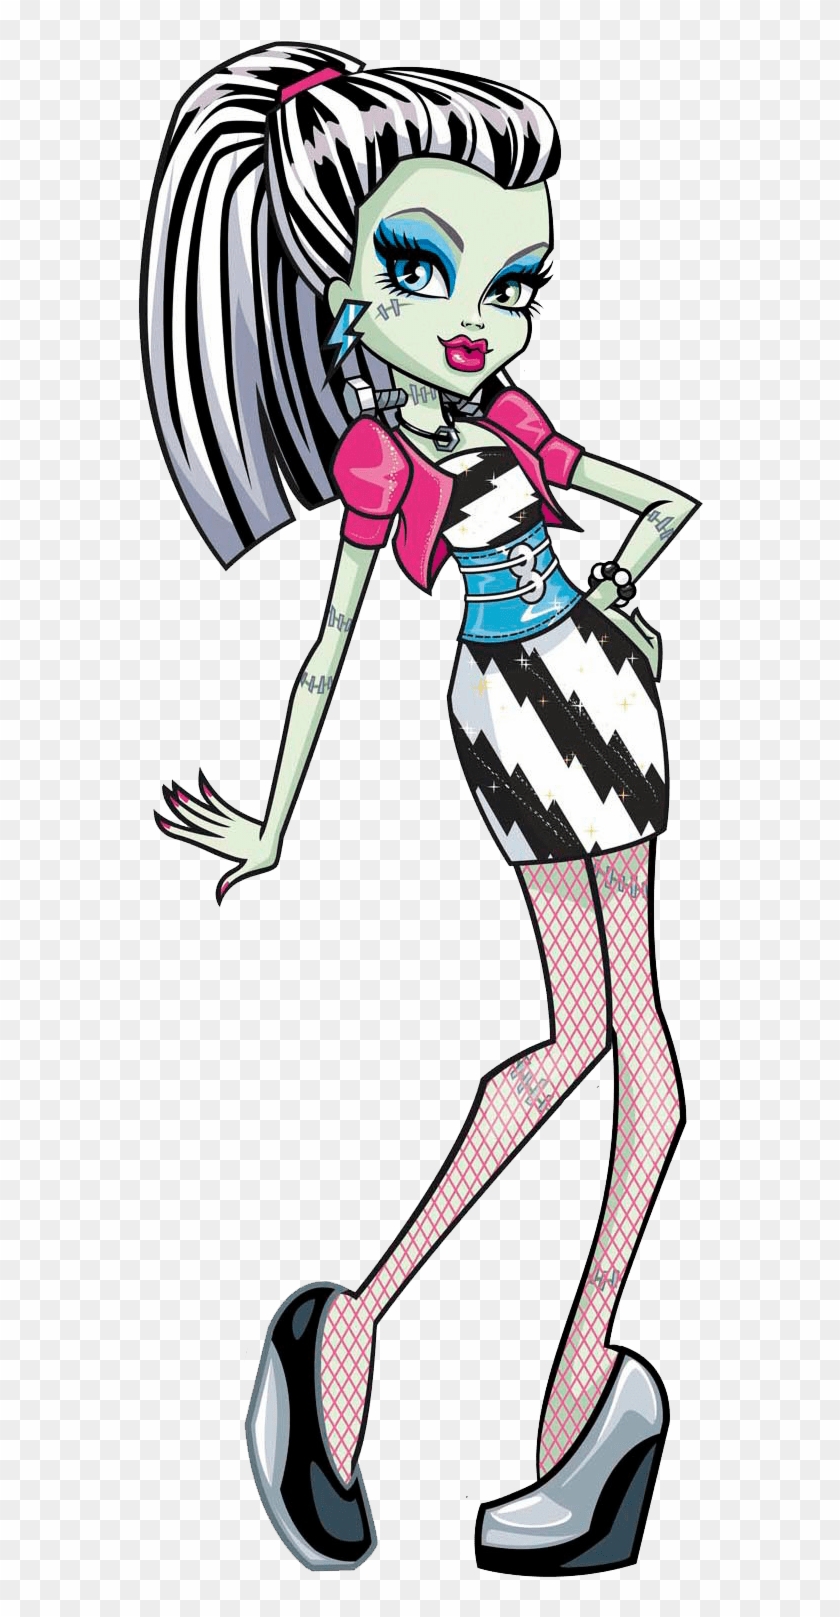 Frankie Monster High Clipart 4 By James - Monster High Frankie Stein #1188248